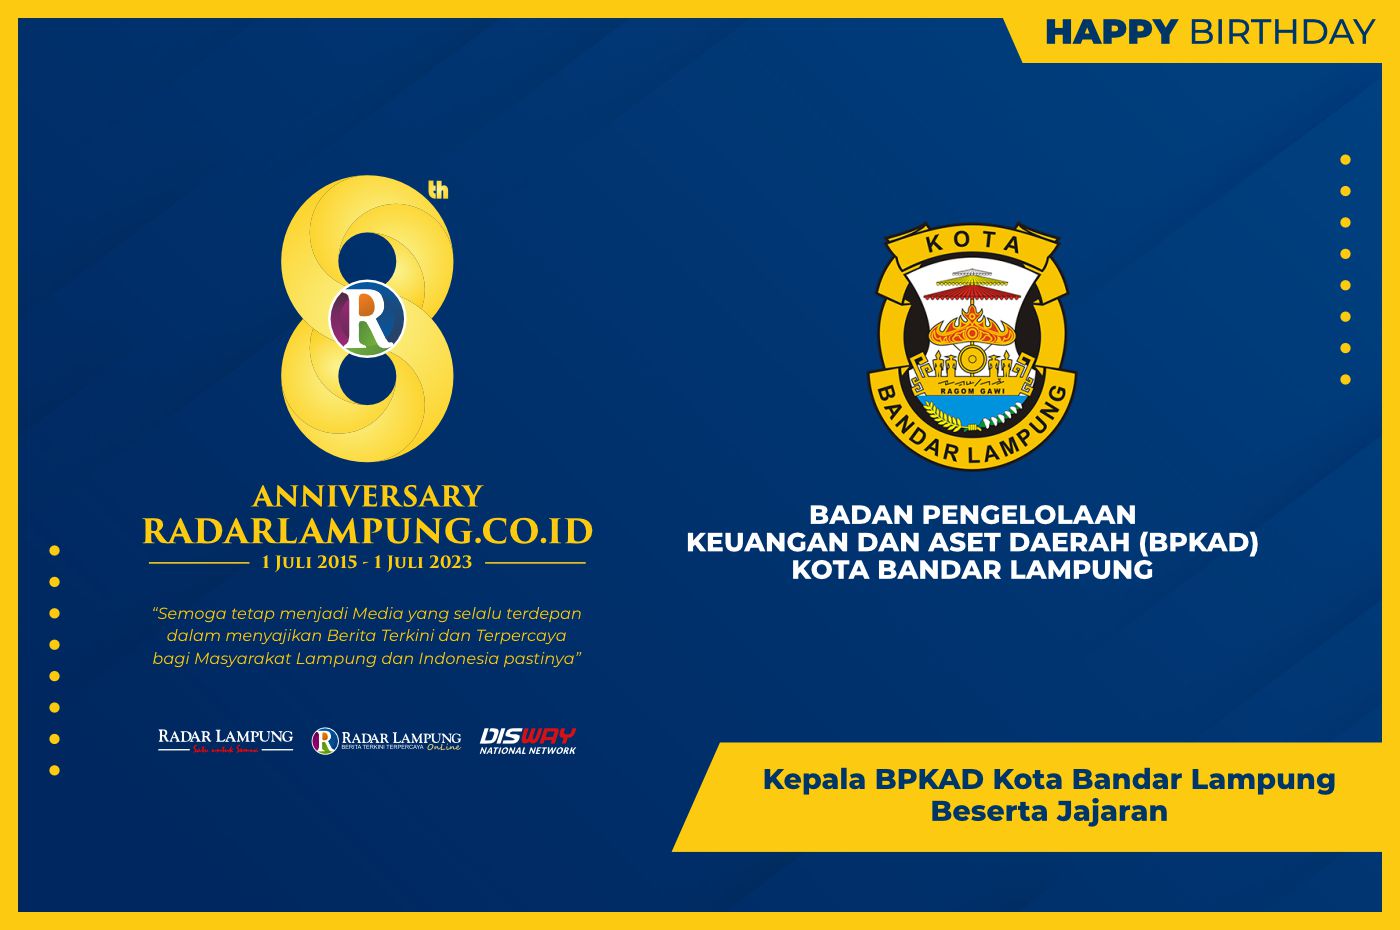 BPKAD Kota Bandar Lampung: Selamat Milad Radar Lampung Online ke-8